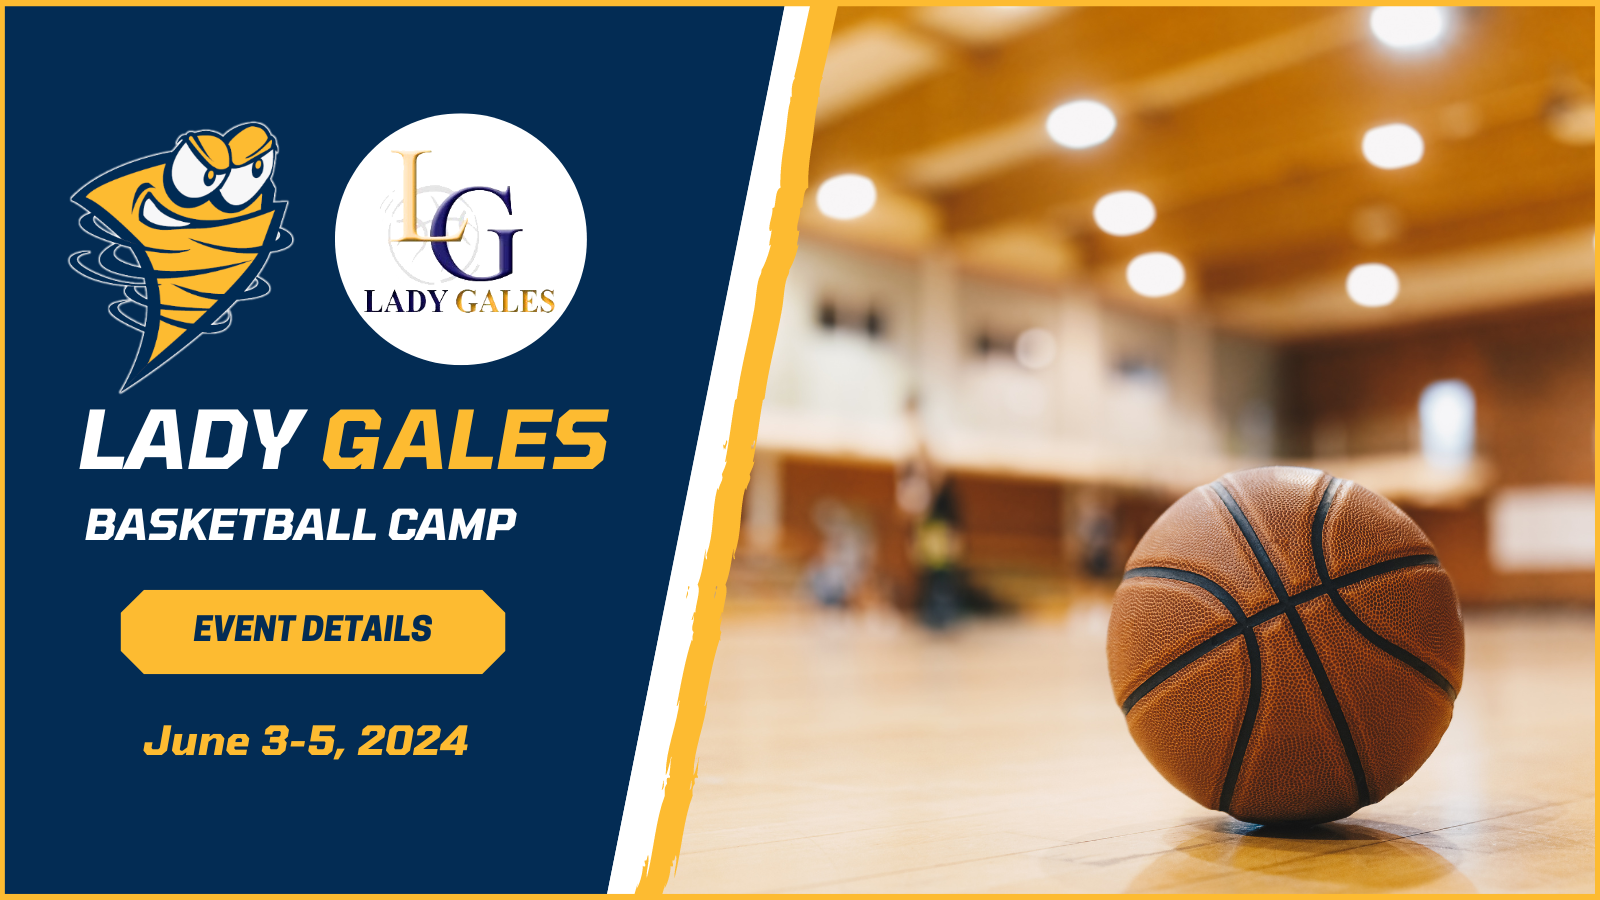 Lady gales basketball camp ad